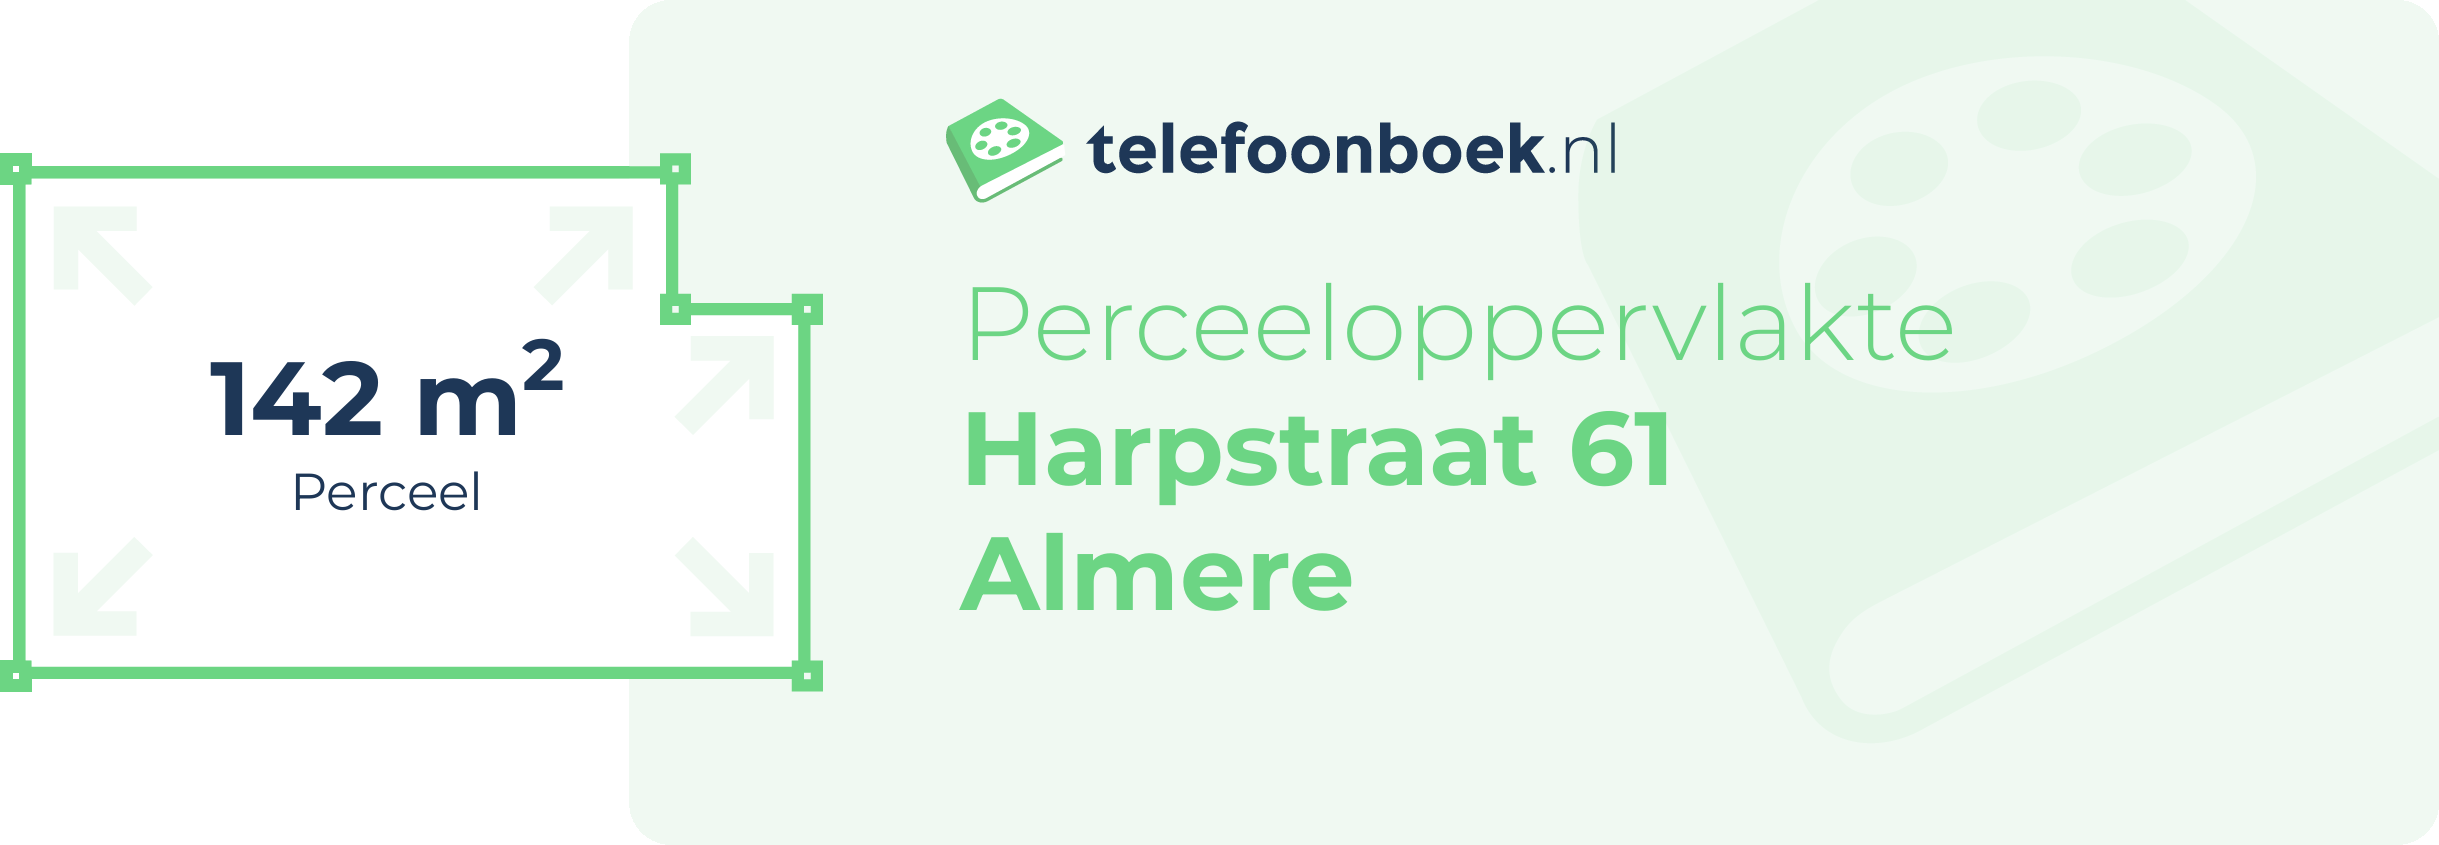 Perceeloppervlakte Harpstraat 61 Almere